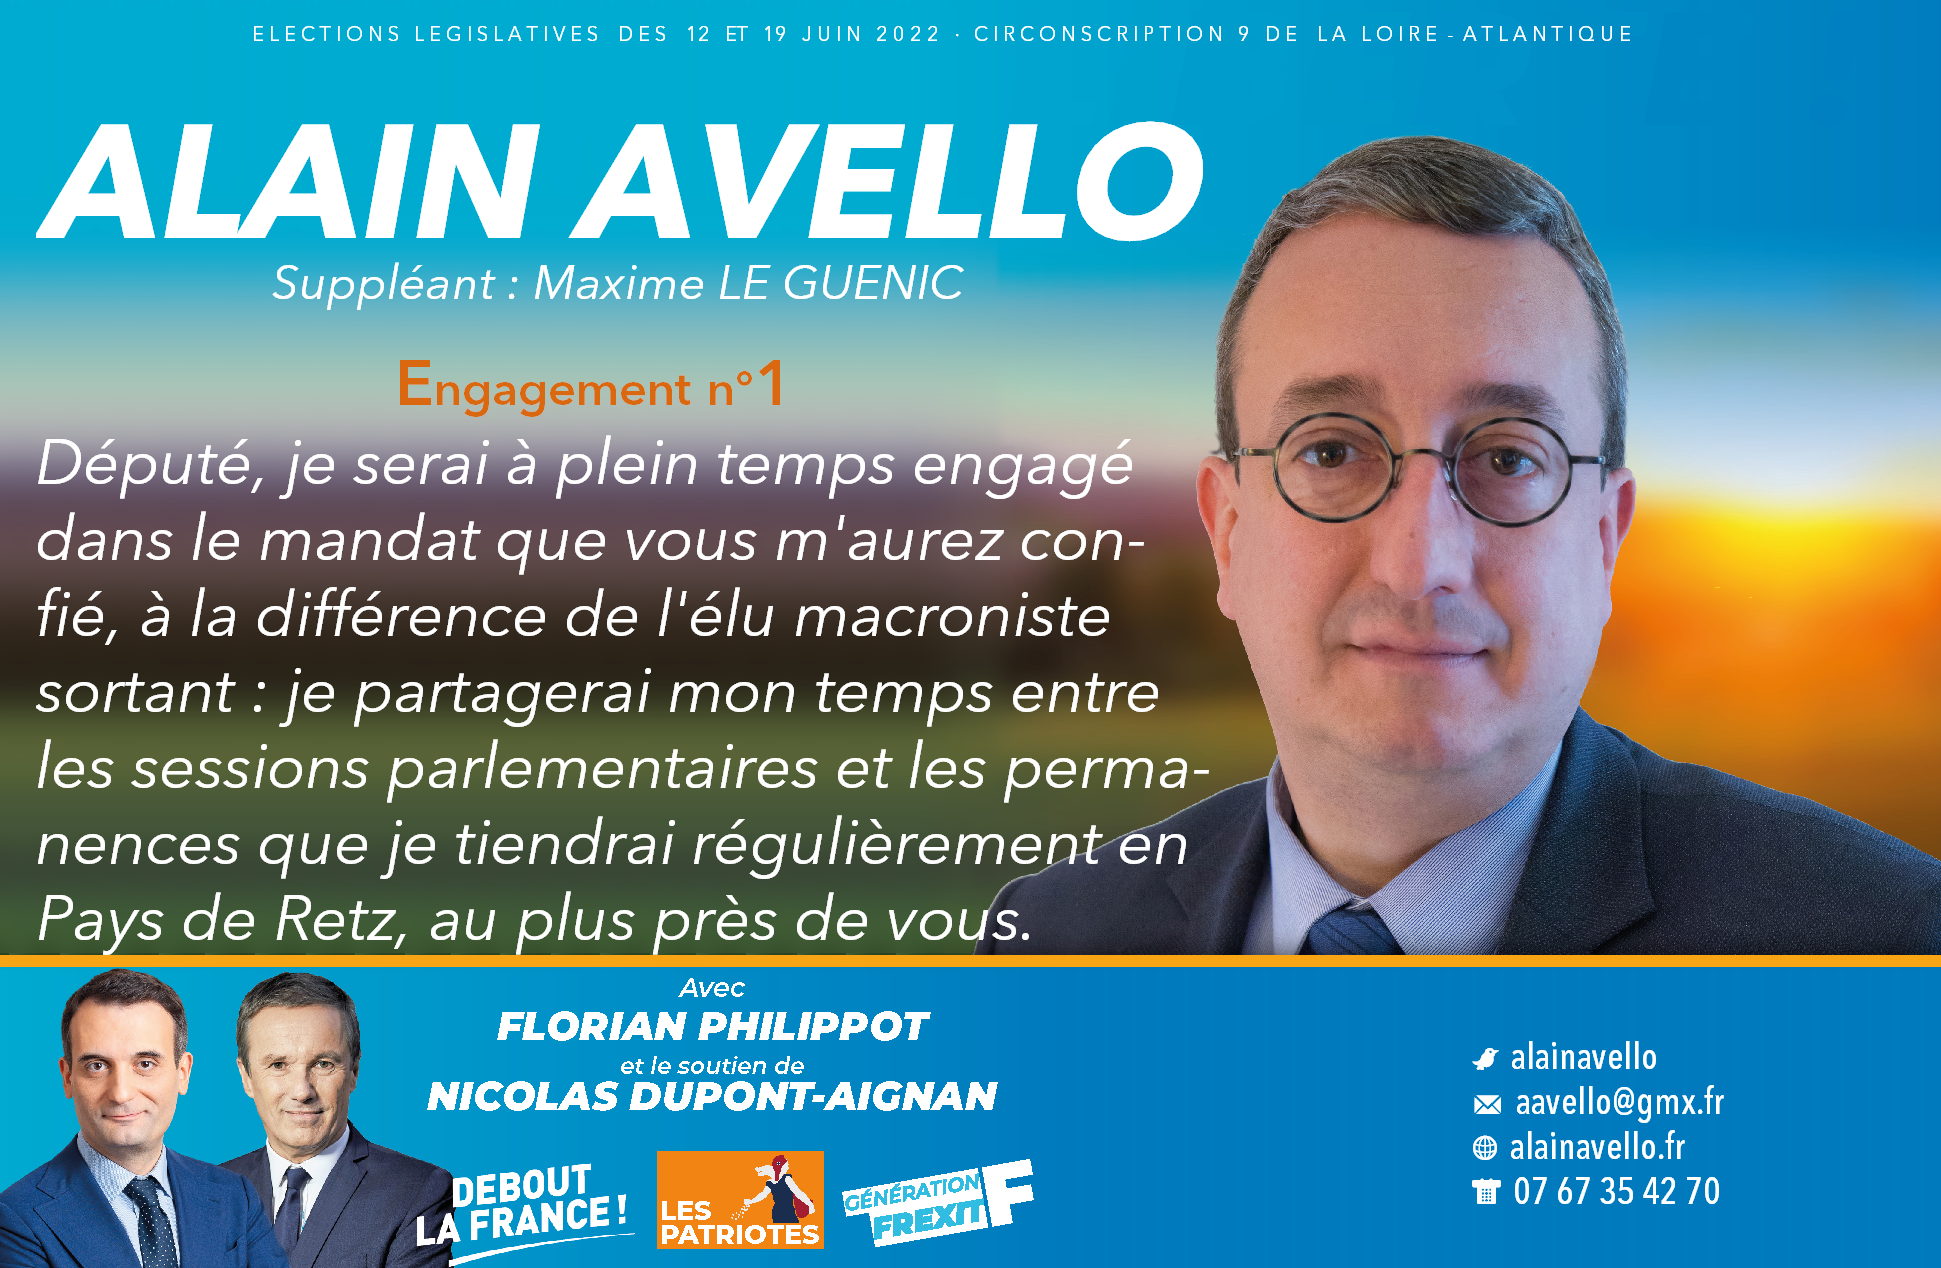 https://www.alainavello.fr/wp-content/uploads/2022/05/Visuel1.png